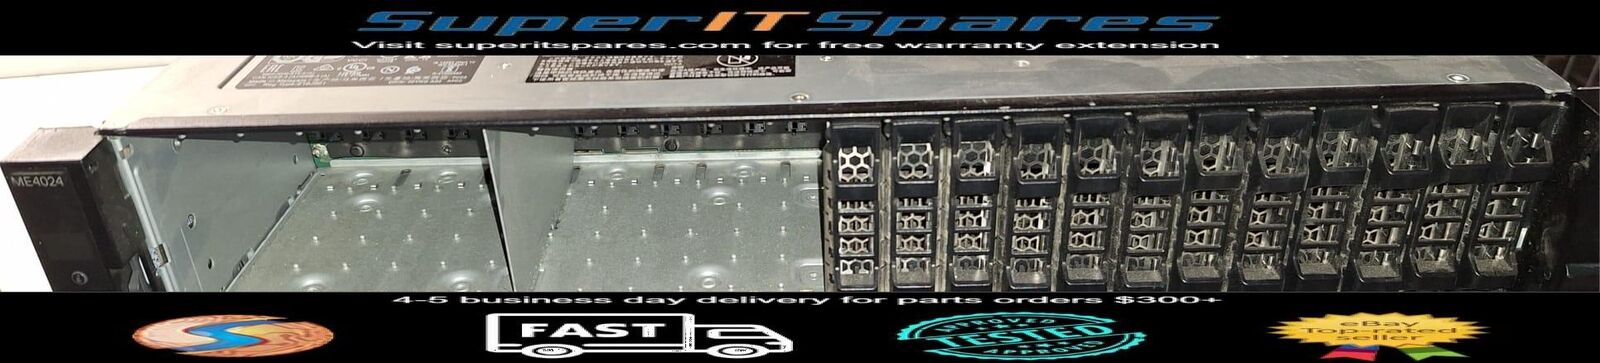 ME4024 Dell EMC PowerVault  Storage Array